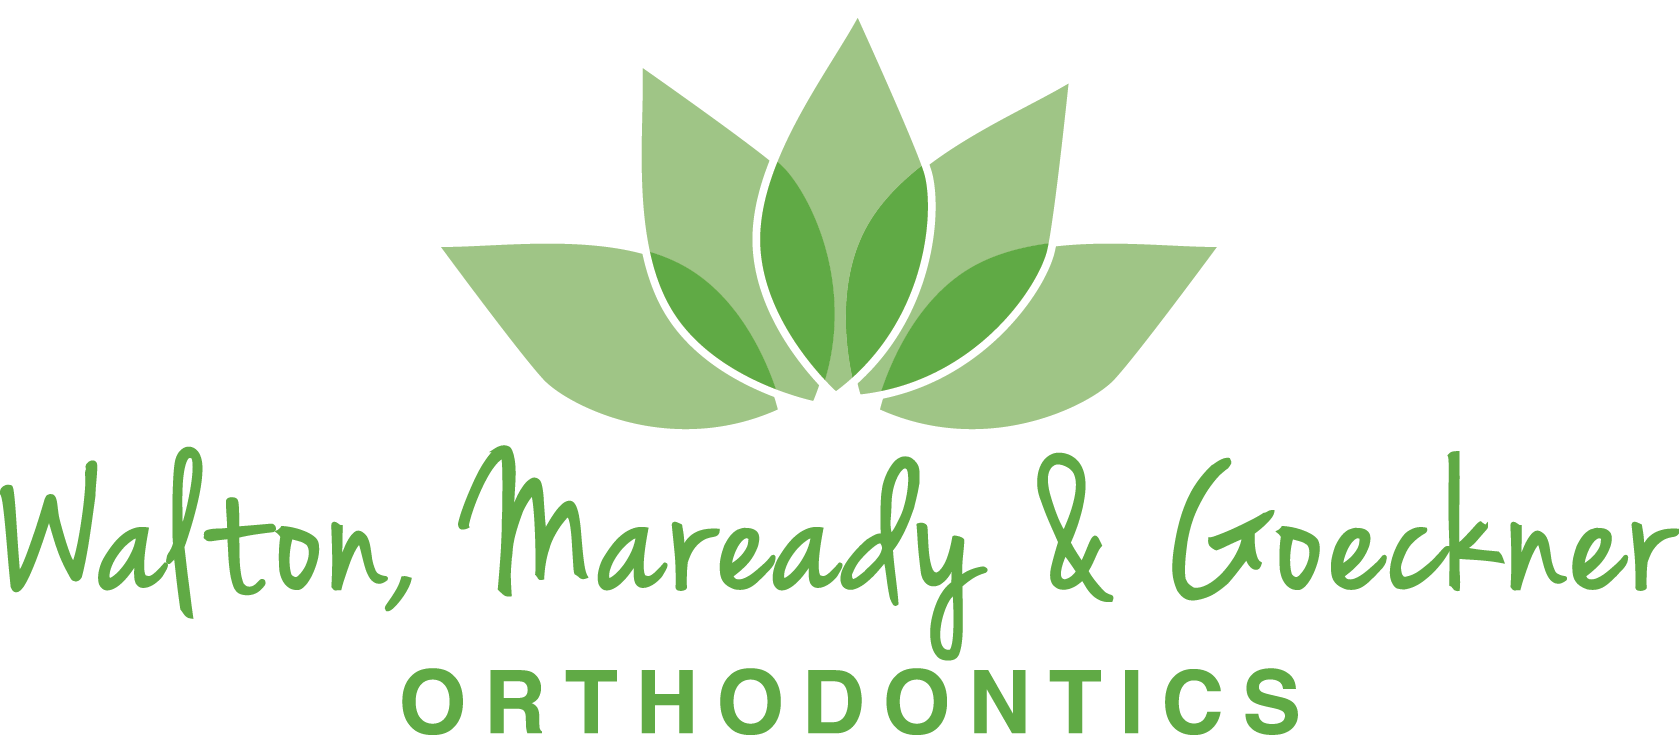 Sponsor Walton, Maready & Goeckner Orthodontics